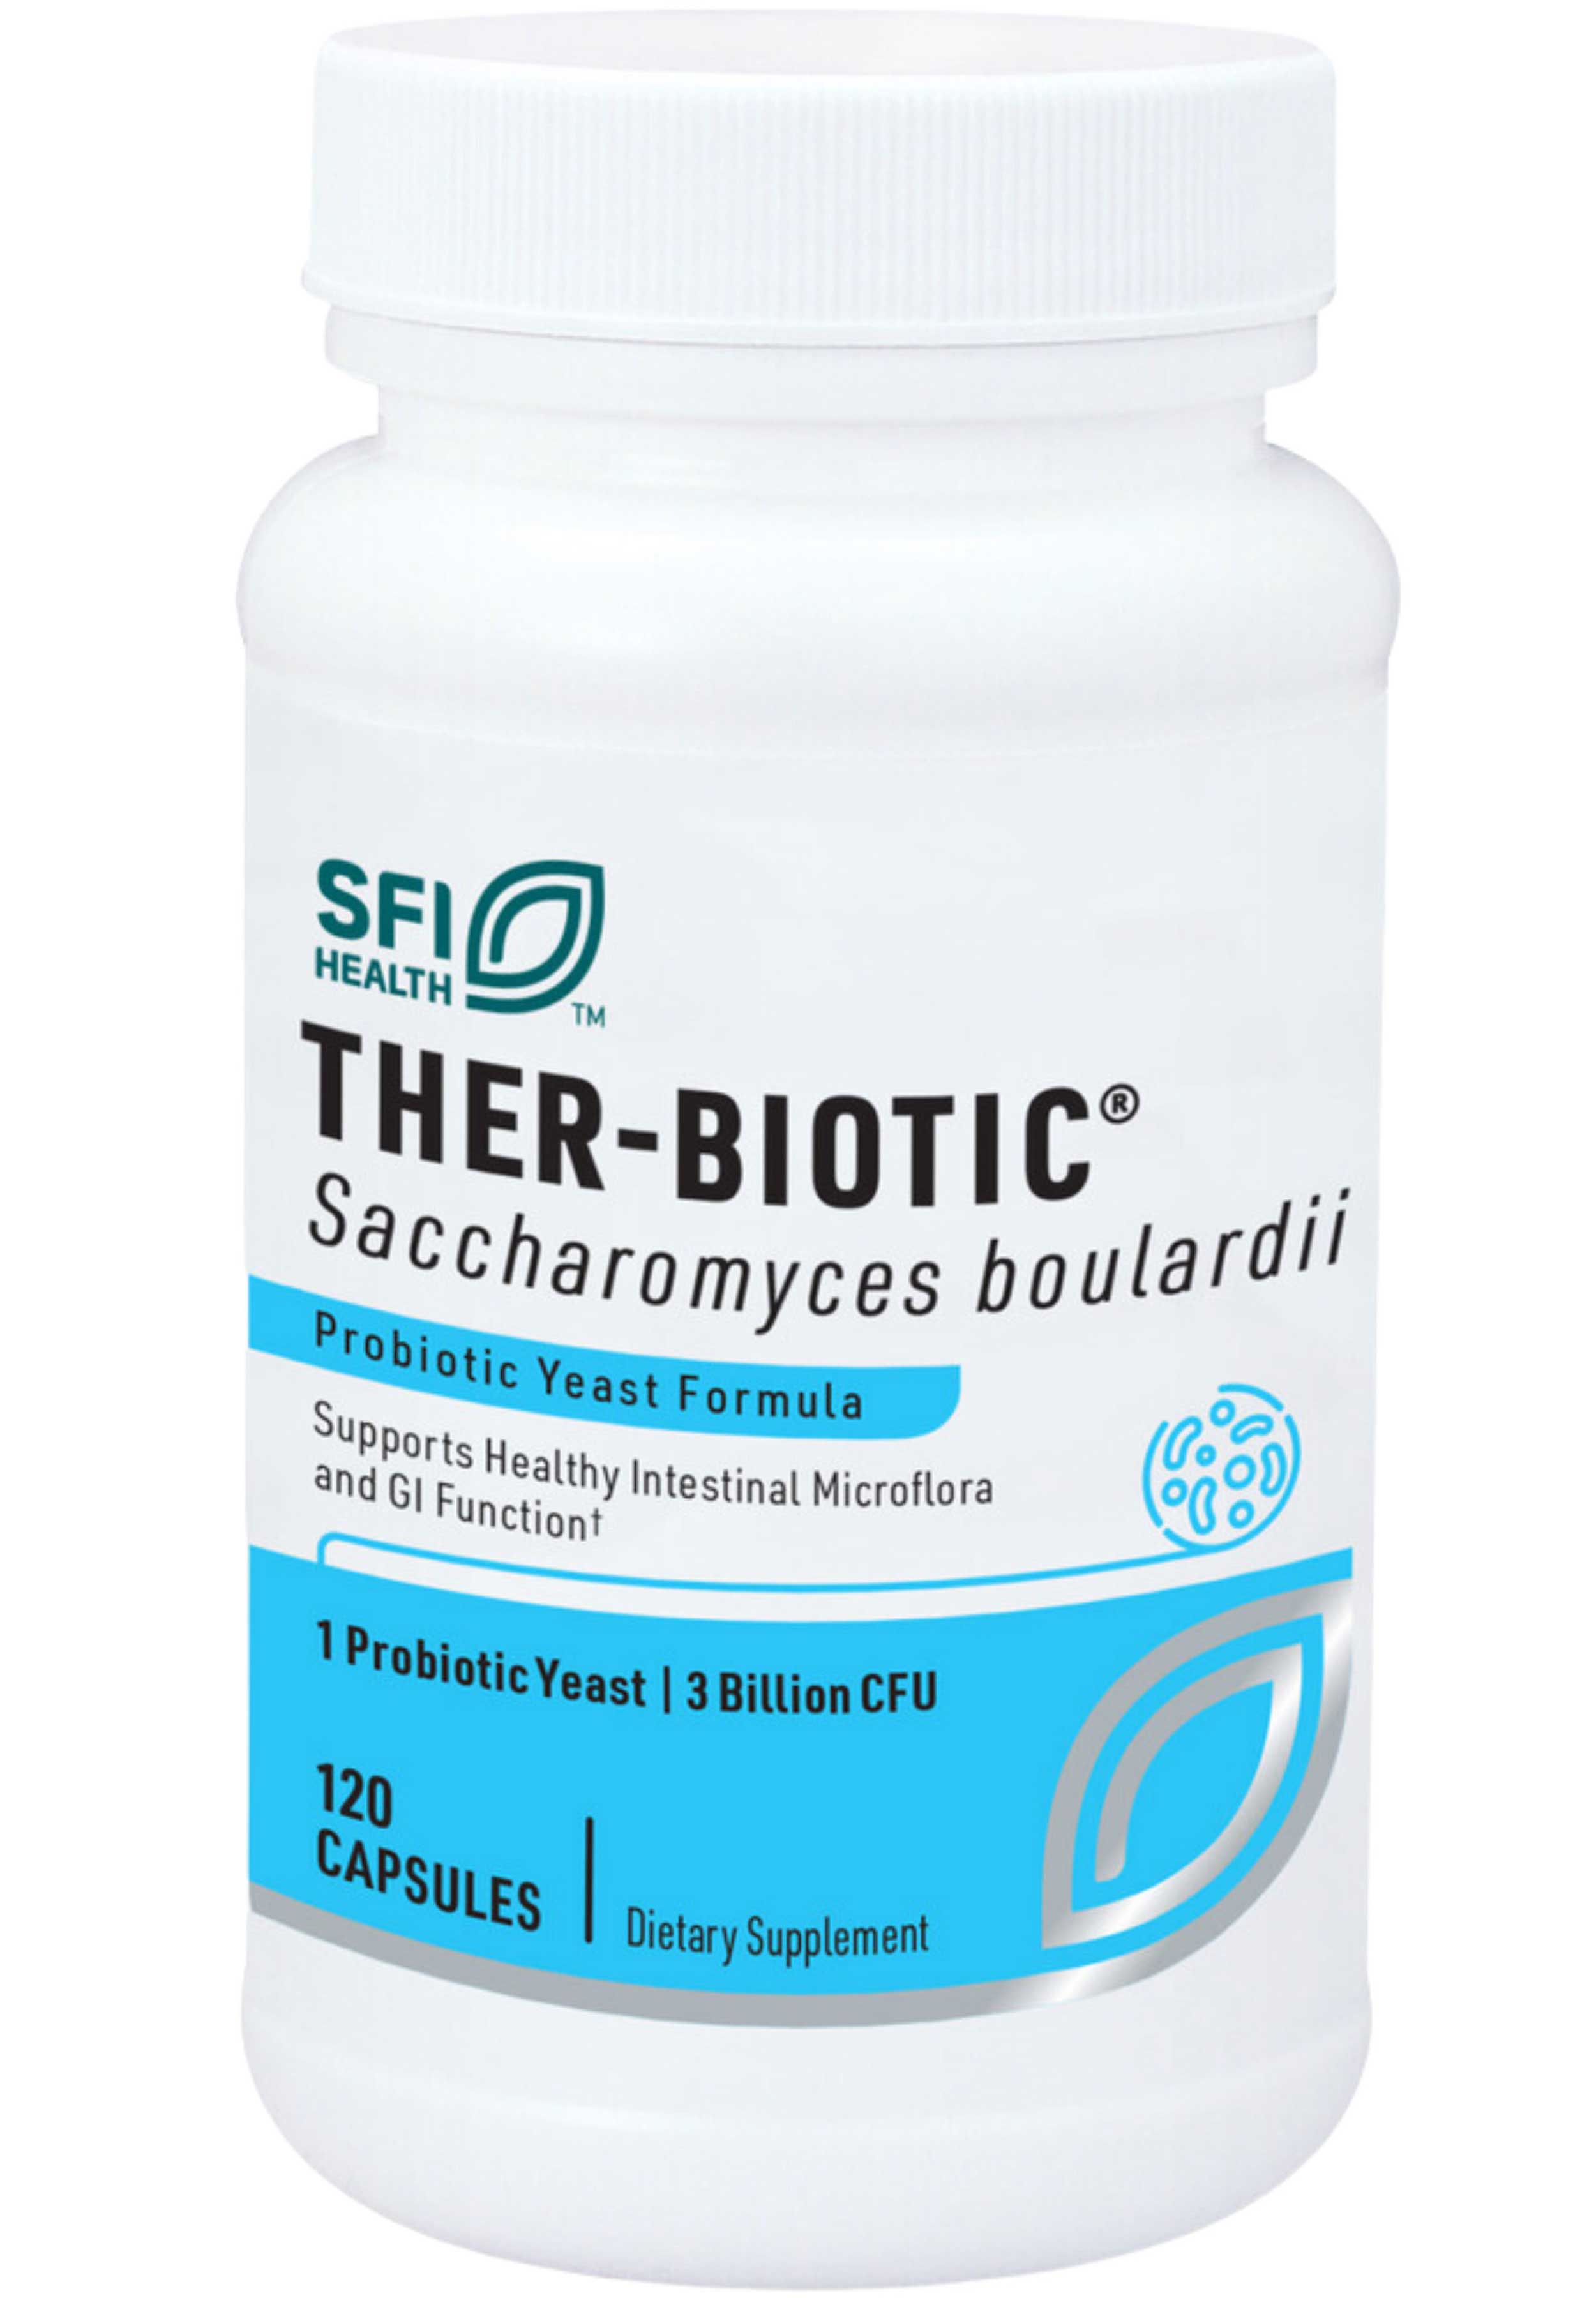 Klaire Labs Ther-Biotic® Saccharomyces boulardii